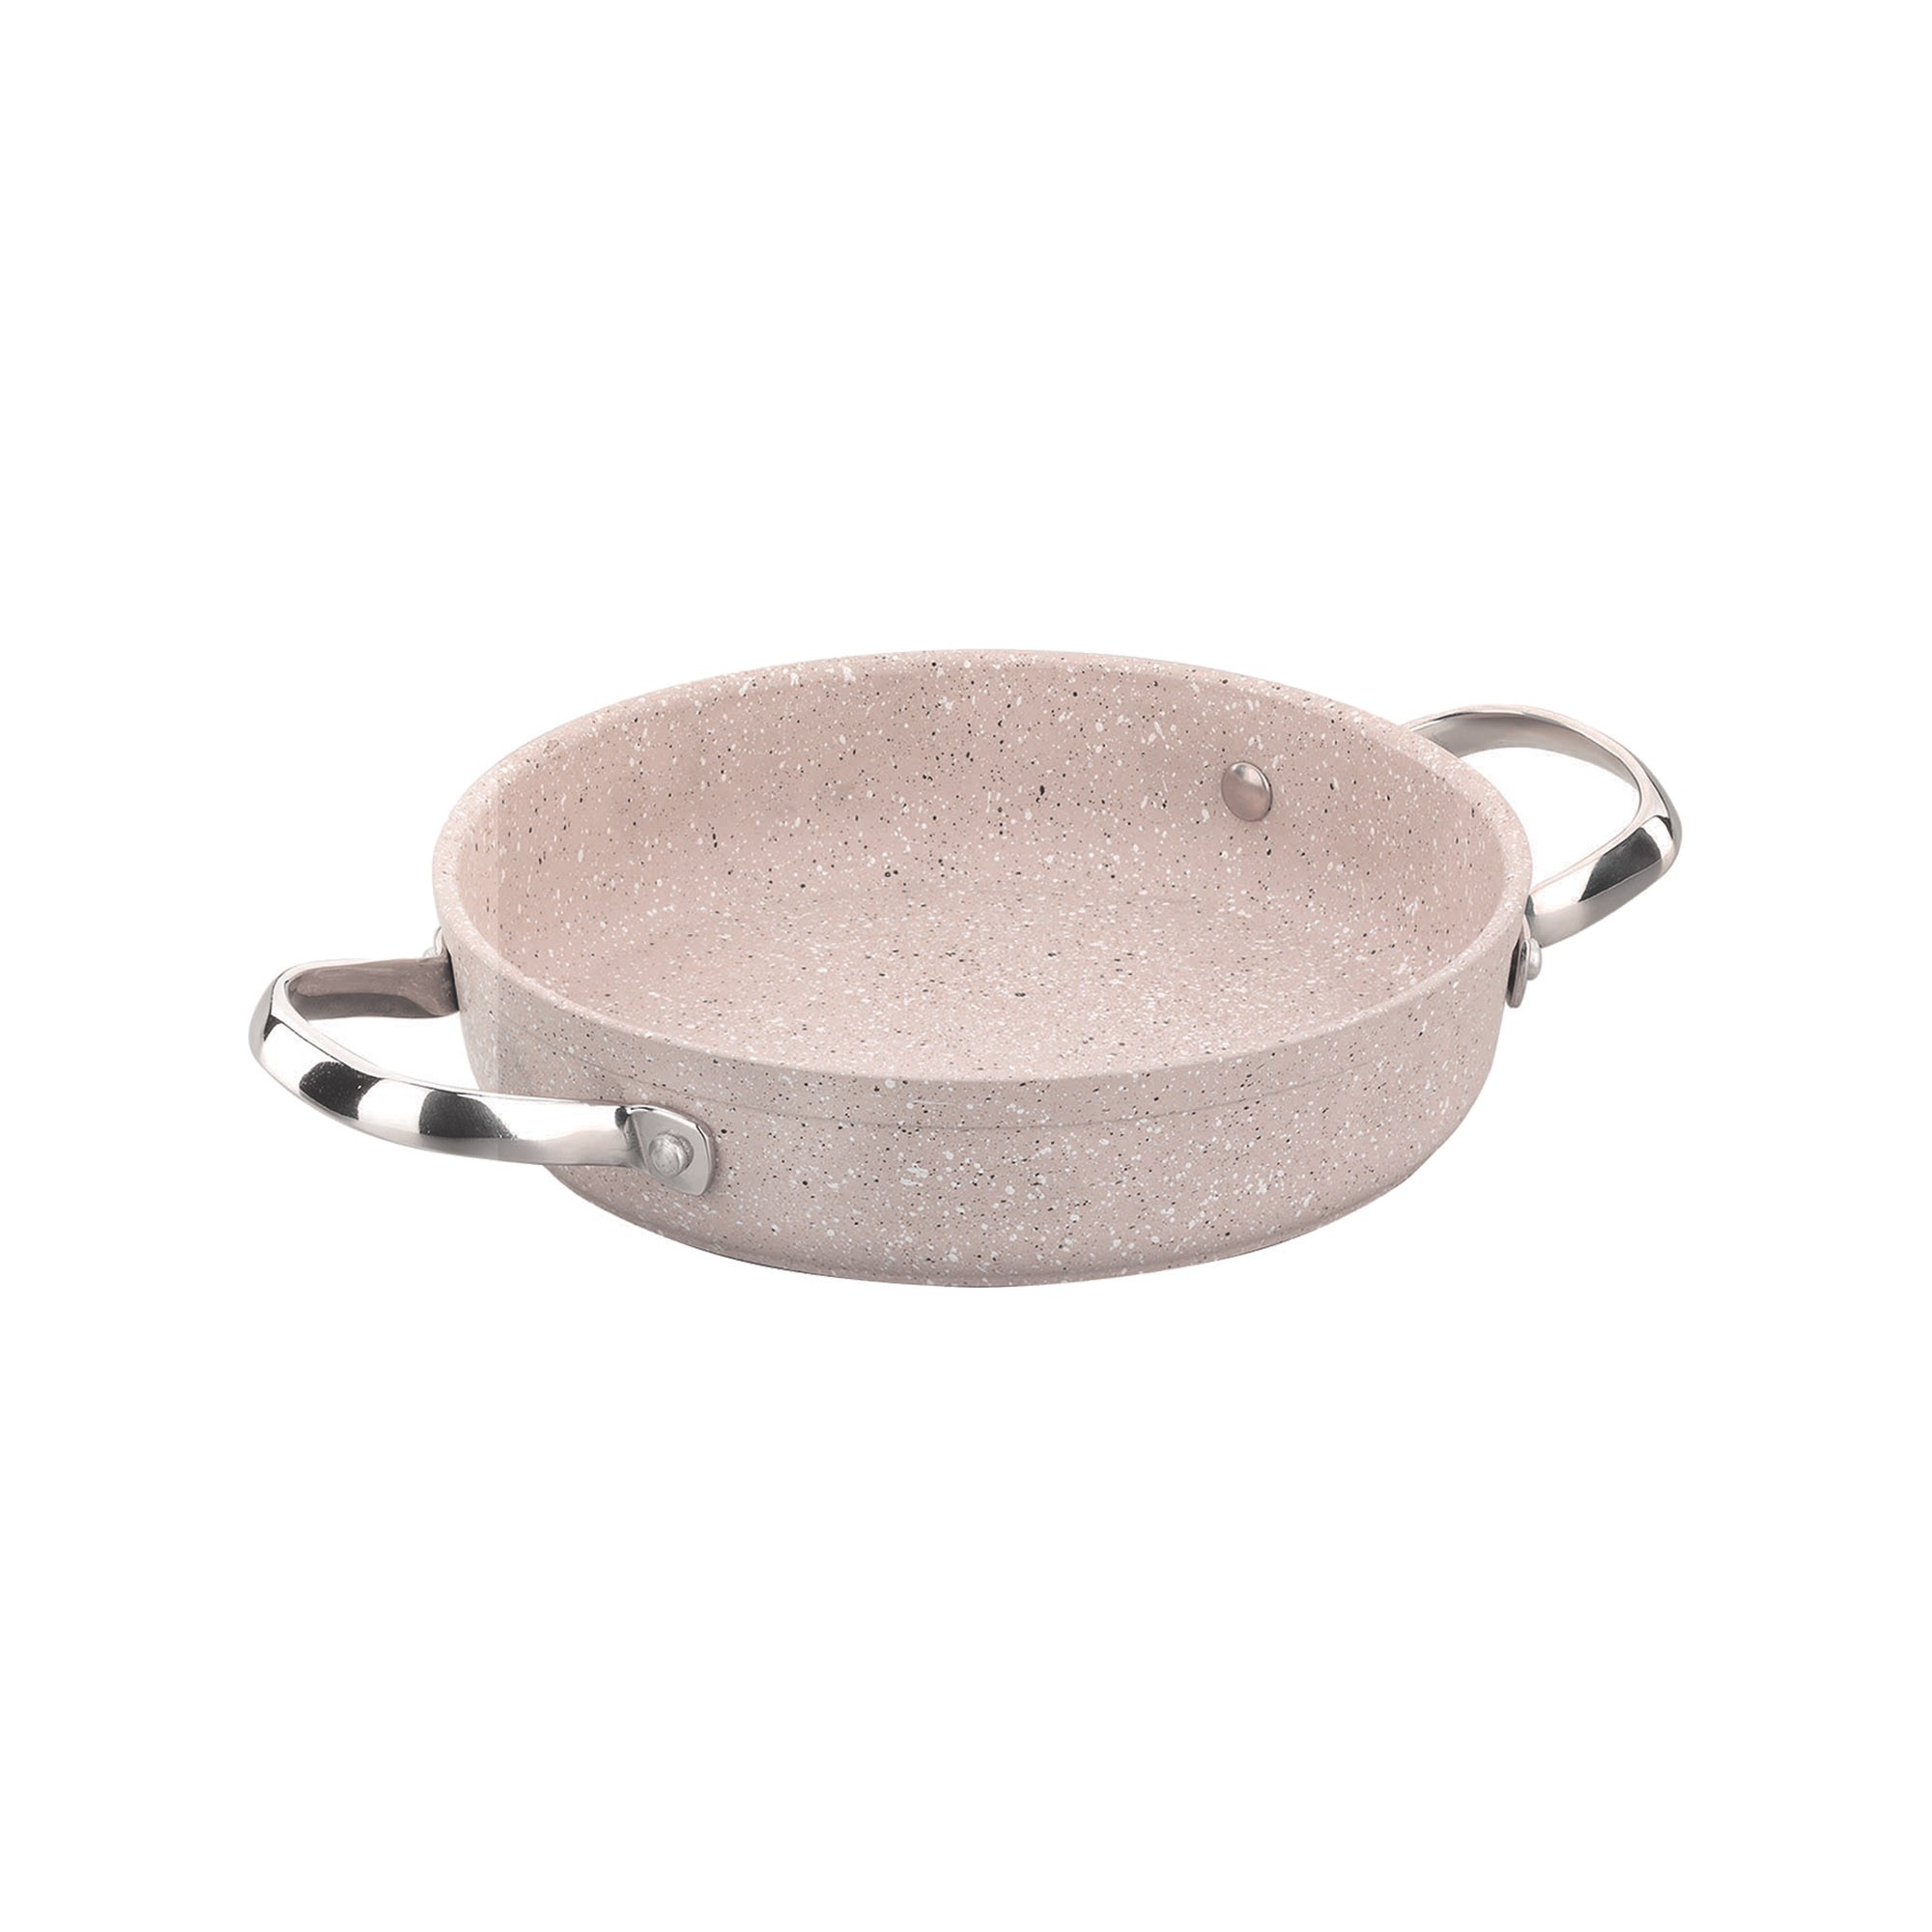 Frying pan, aluminium, 26 cm, “Efficient Duo” range – made by BRA